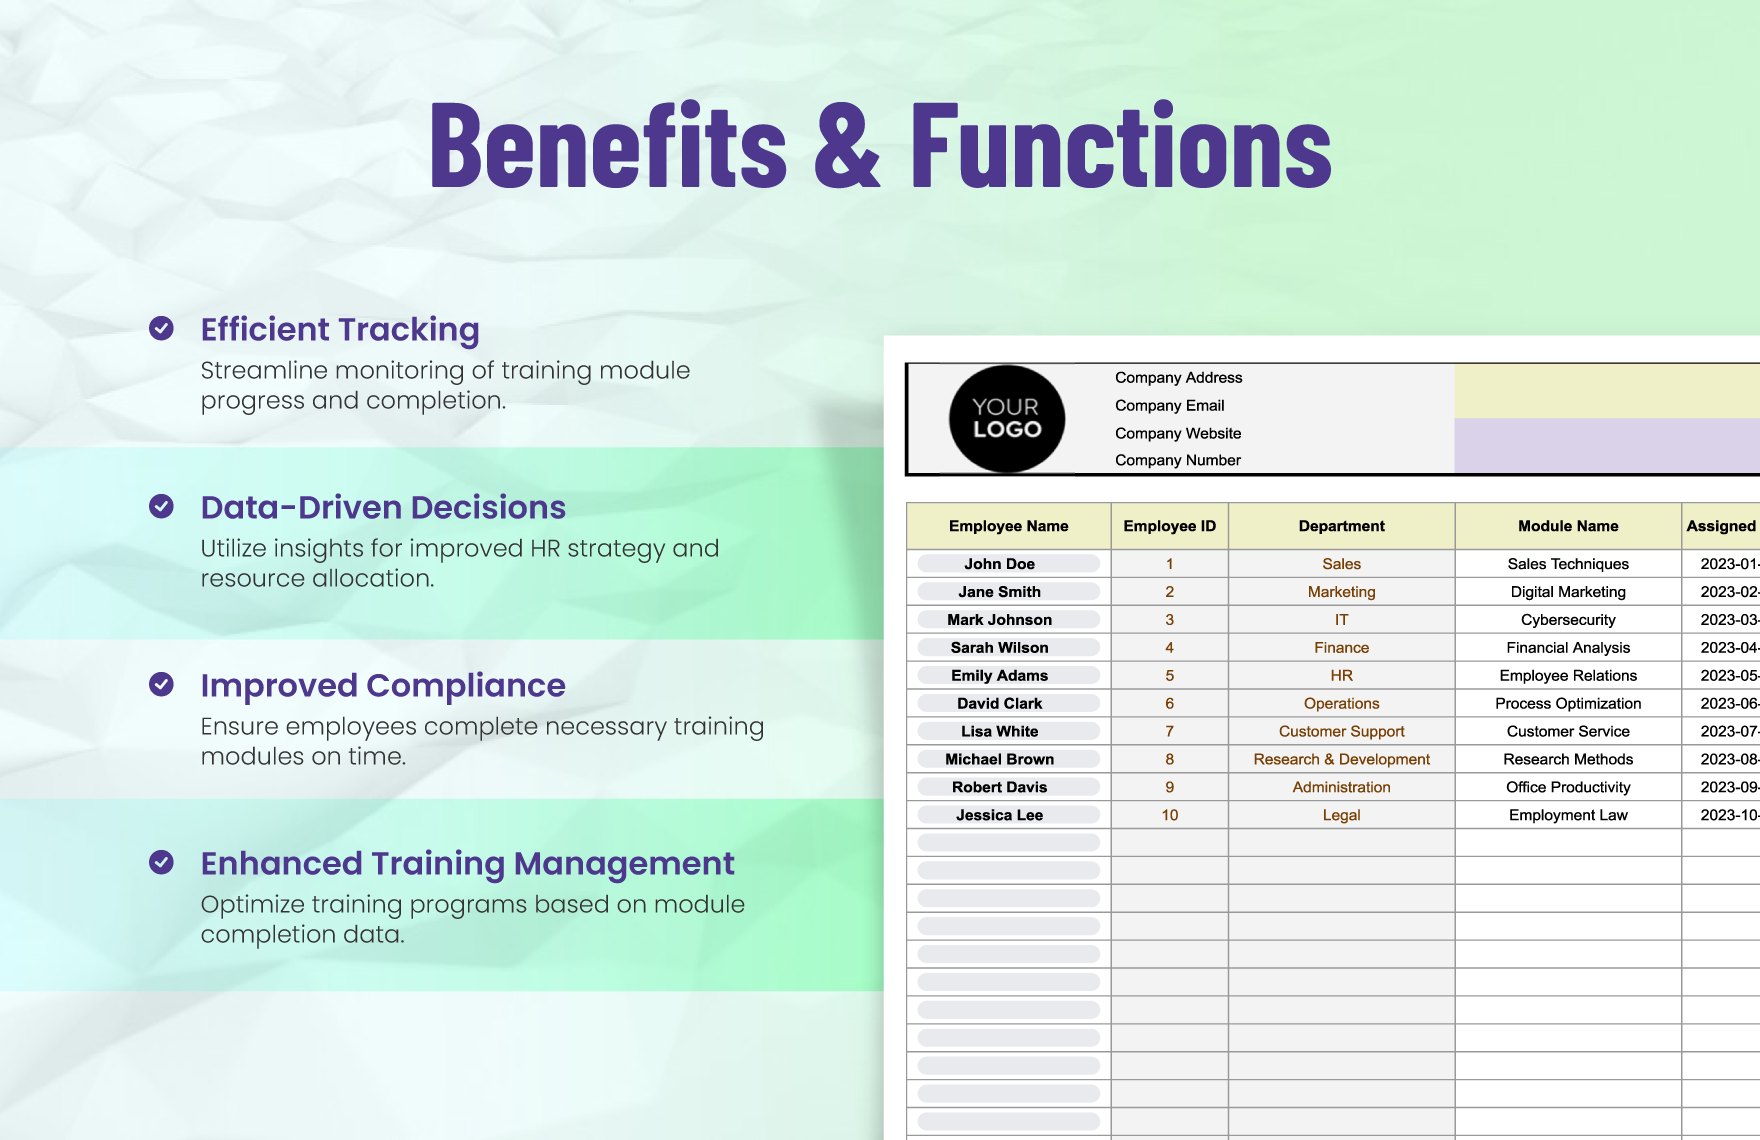 Training Module Progress & Completion Tracker HR Template